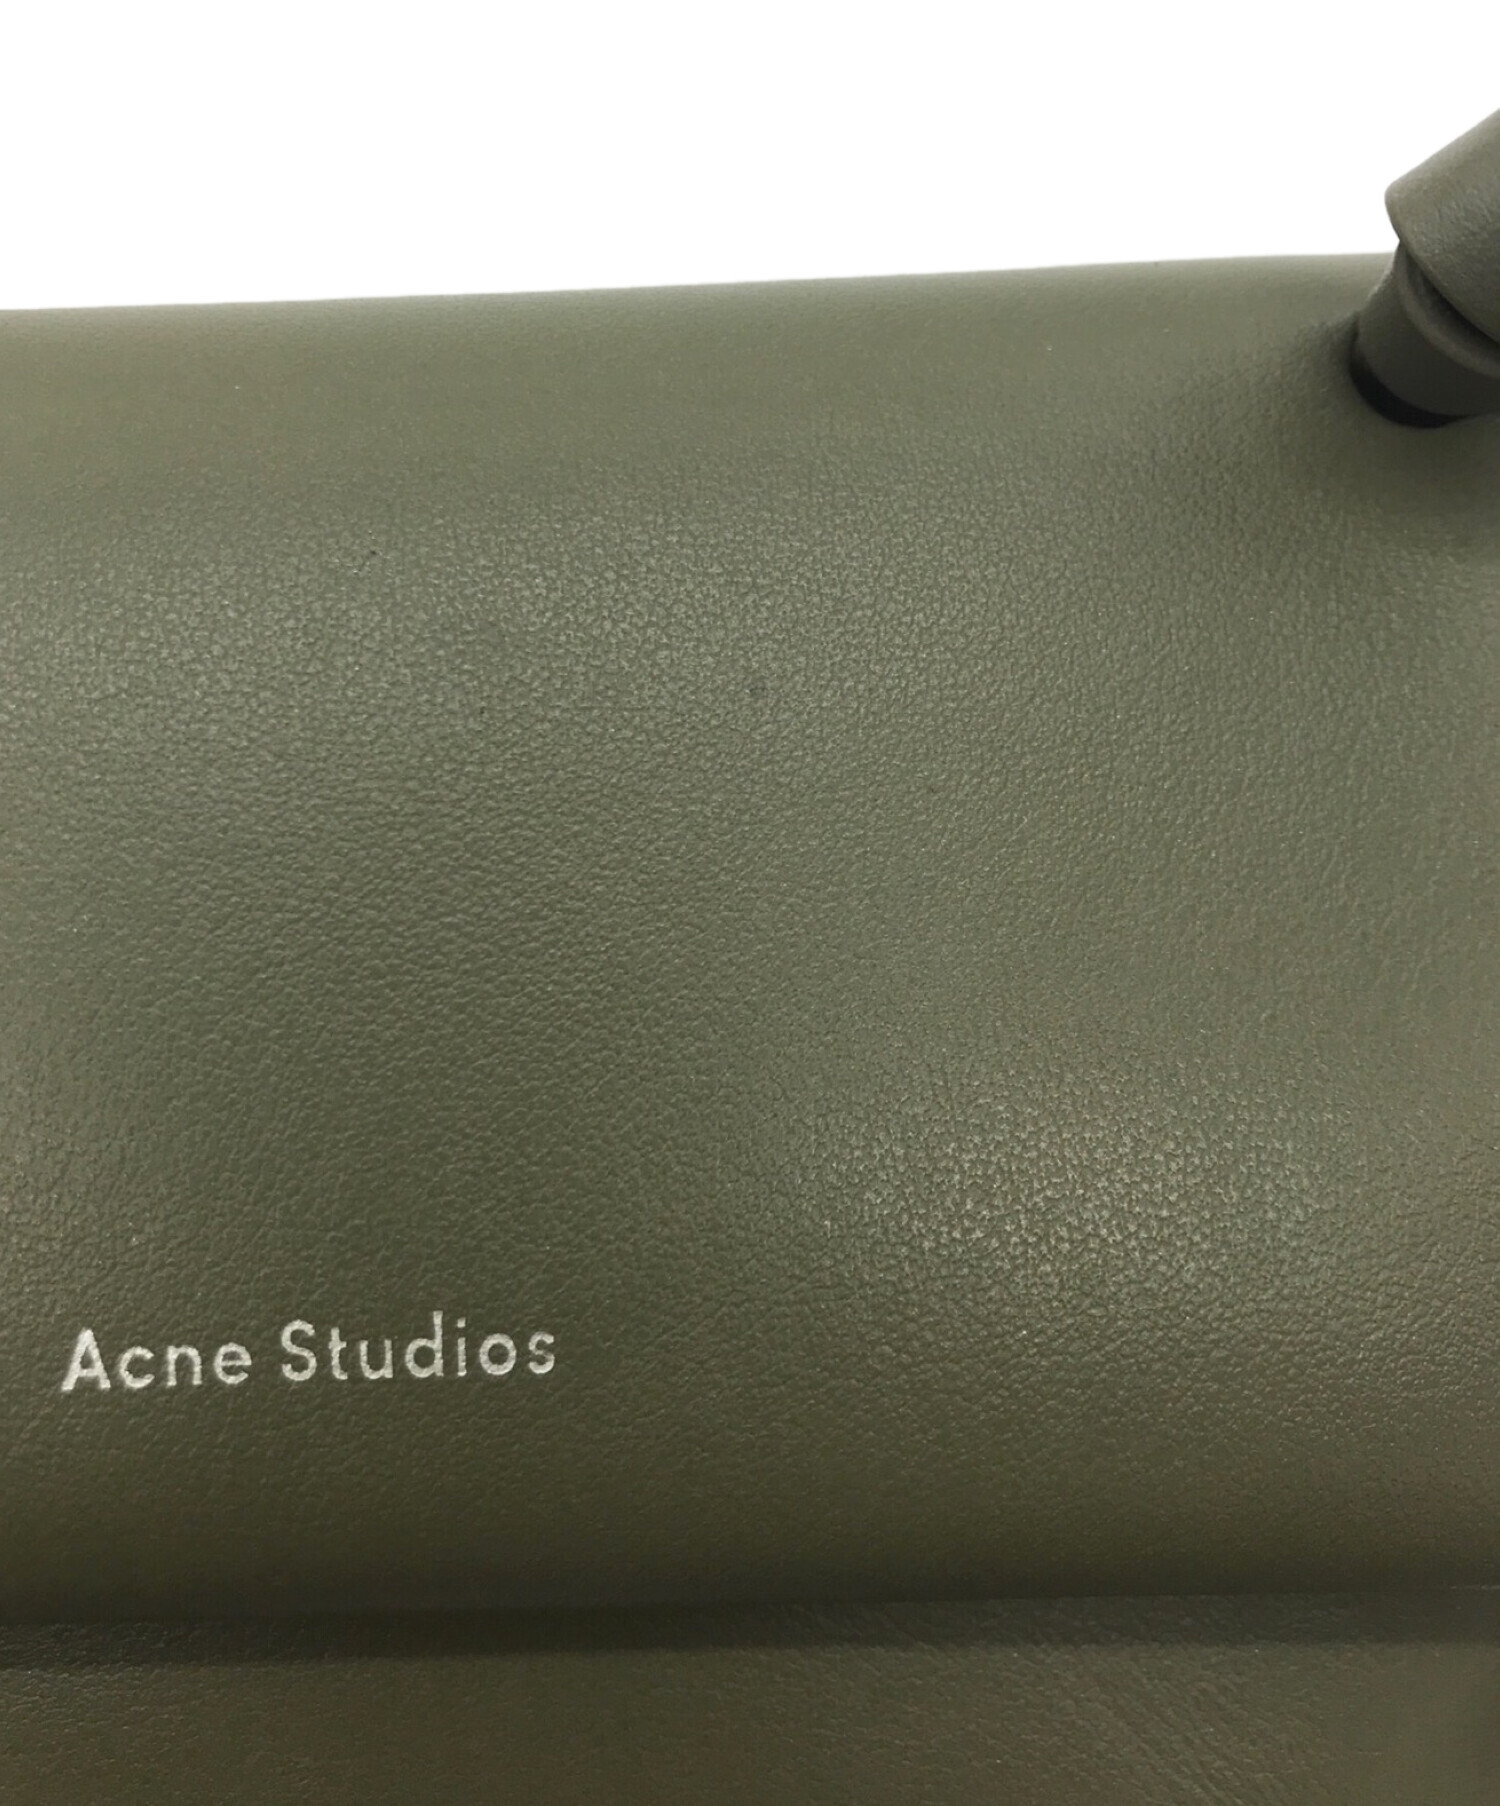 Acne studios (アクネストゥディオズ) レザークロスボディバッグ オリーブ サイズ:下記参照